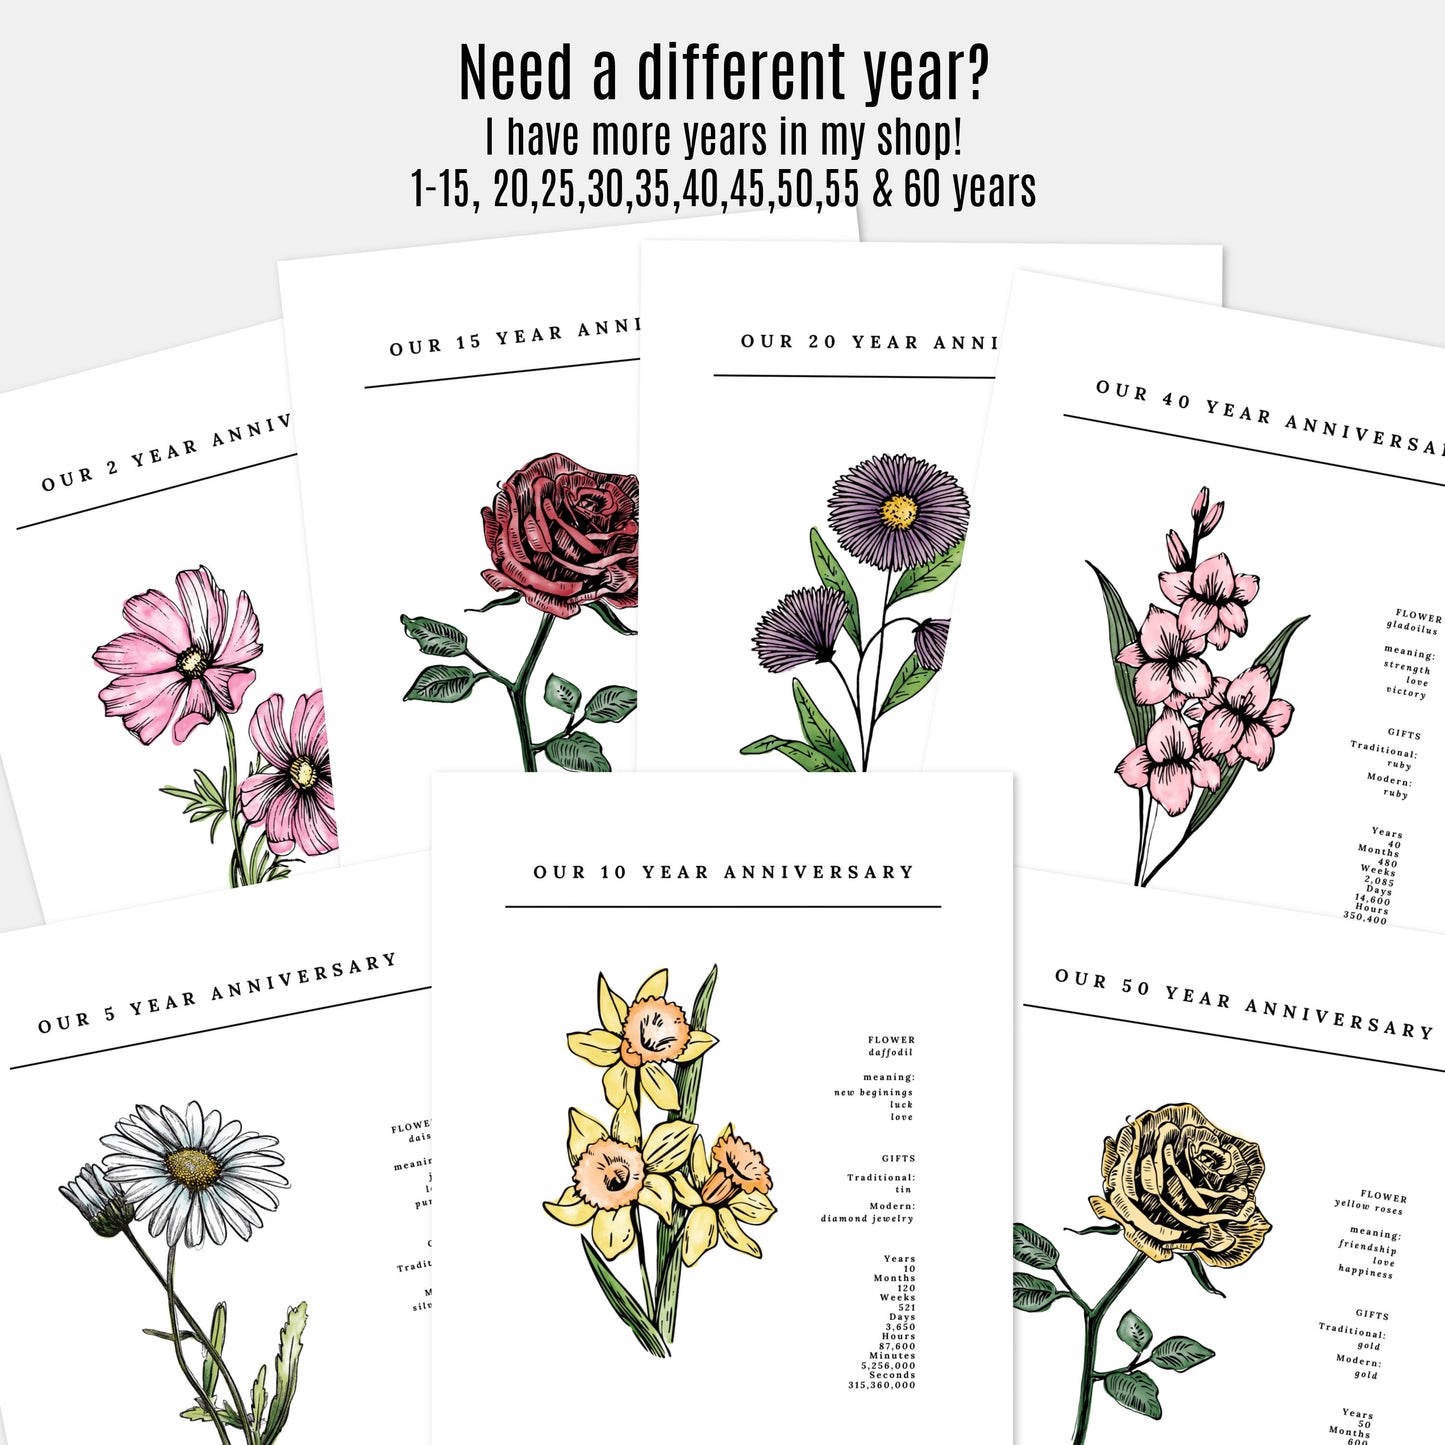 1 Year Anniversary Carnation Flower Art Printable | Gift for Couple Wedding Anniversary Paper